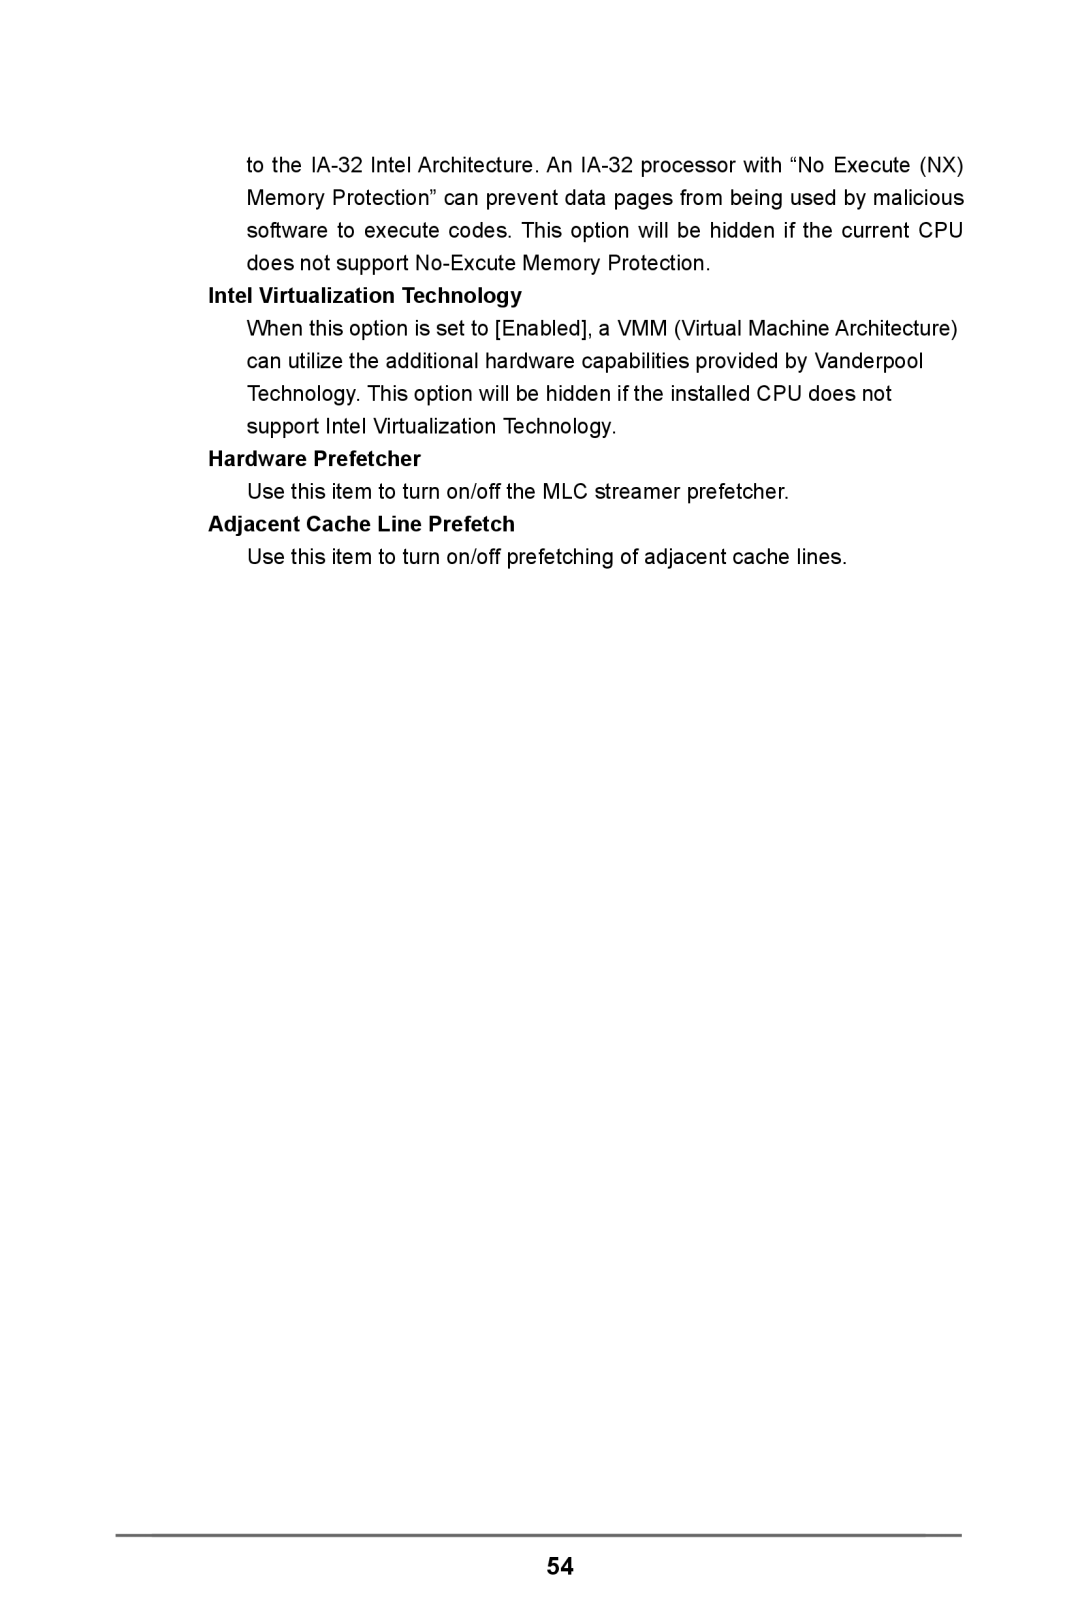 ASRock H61M-DP3 manual Intel Virtualization Technology, Hardware Prefetcher, Adjacent Cache Line Prefetch 